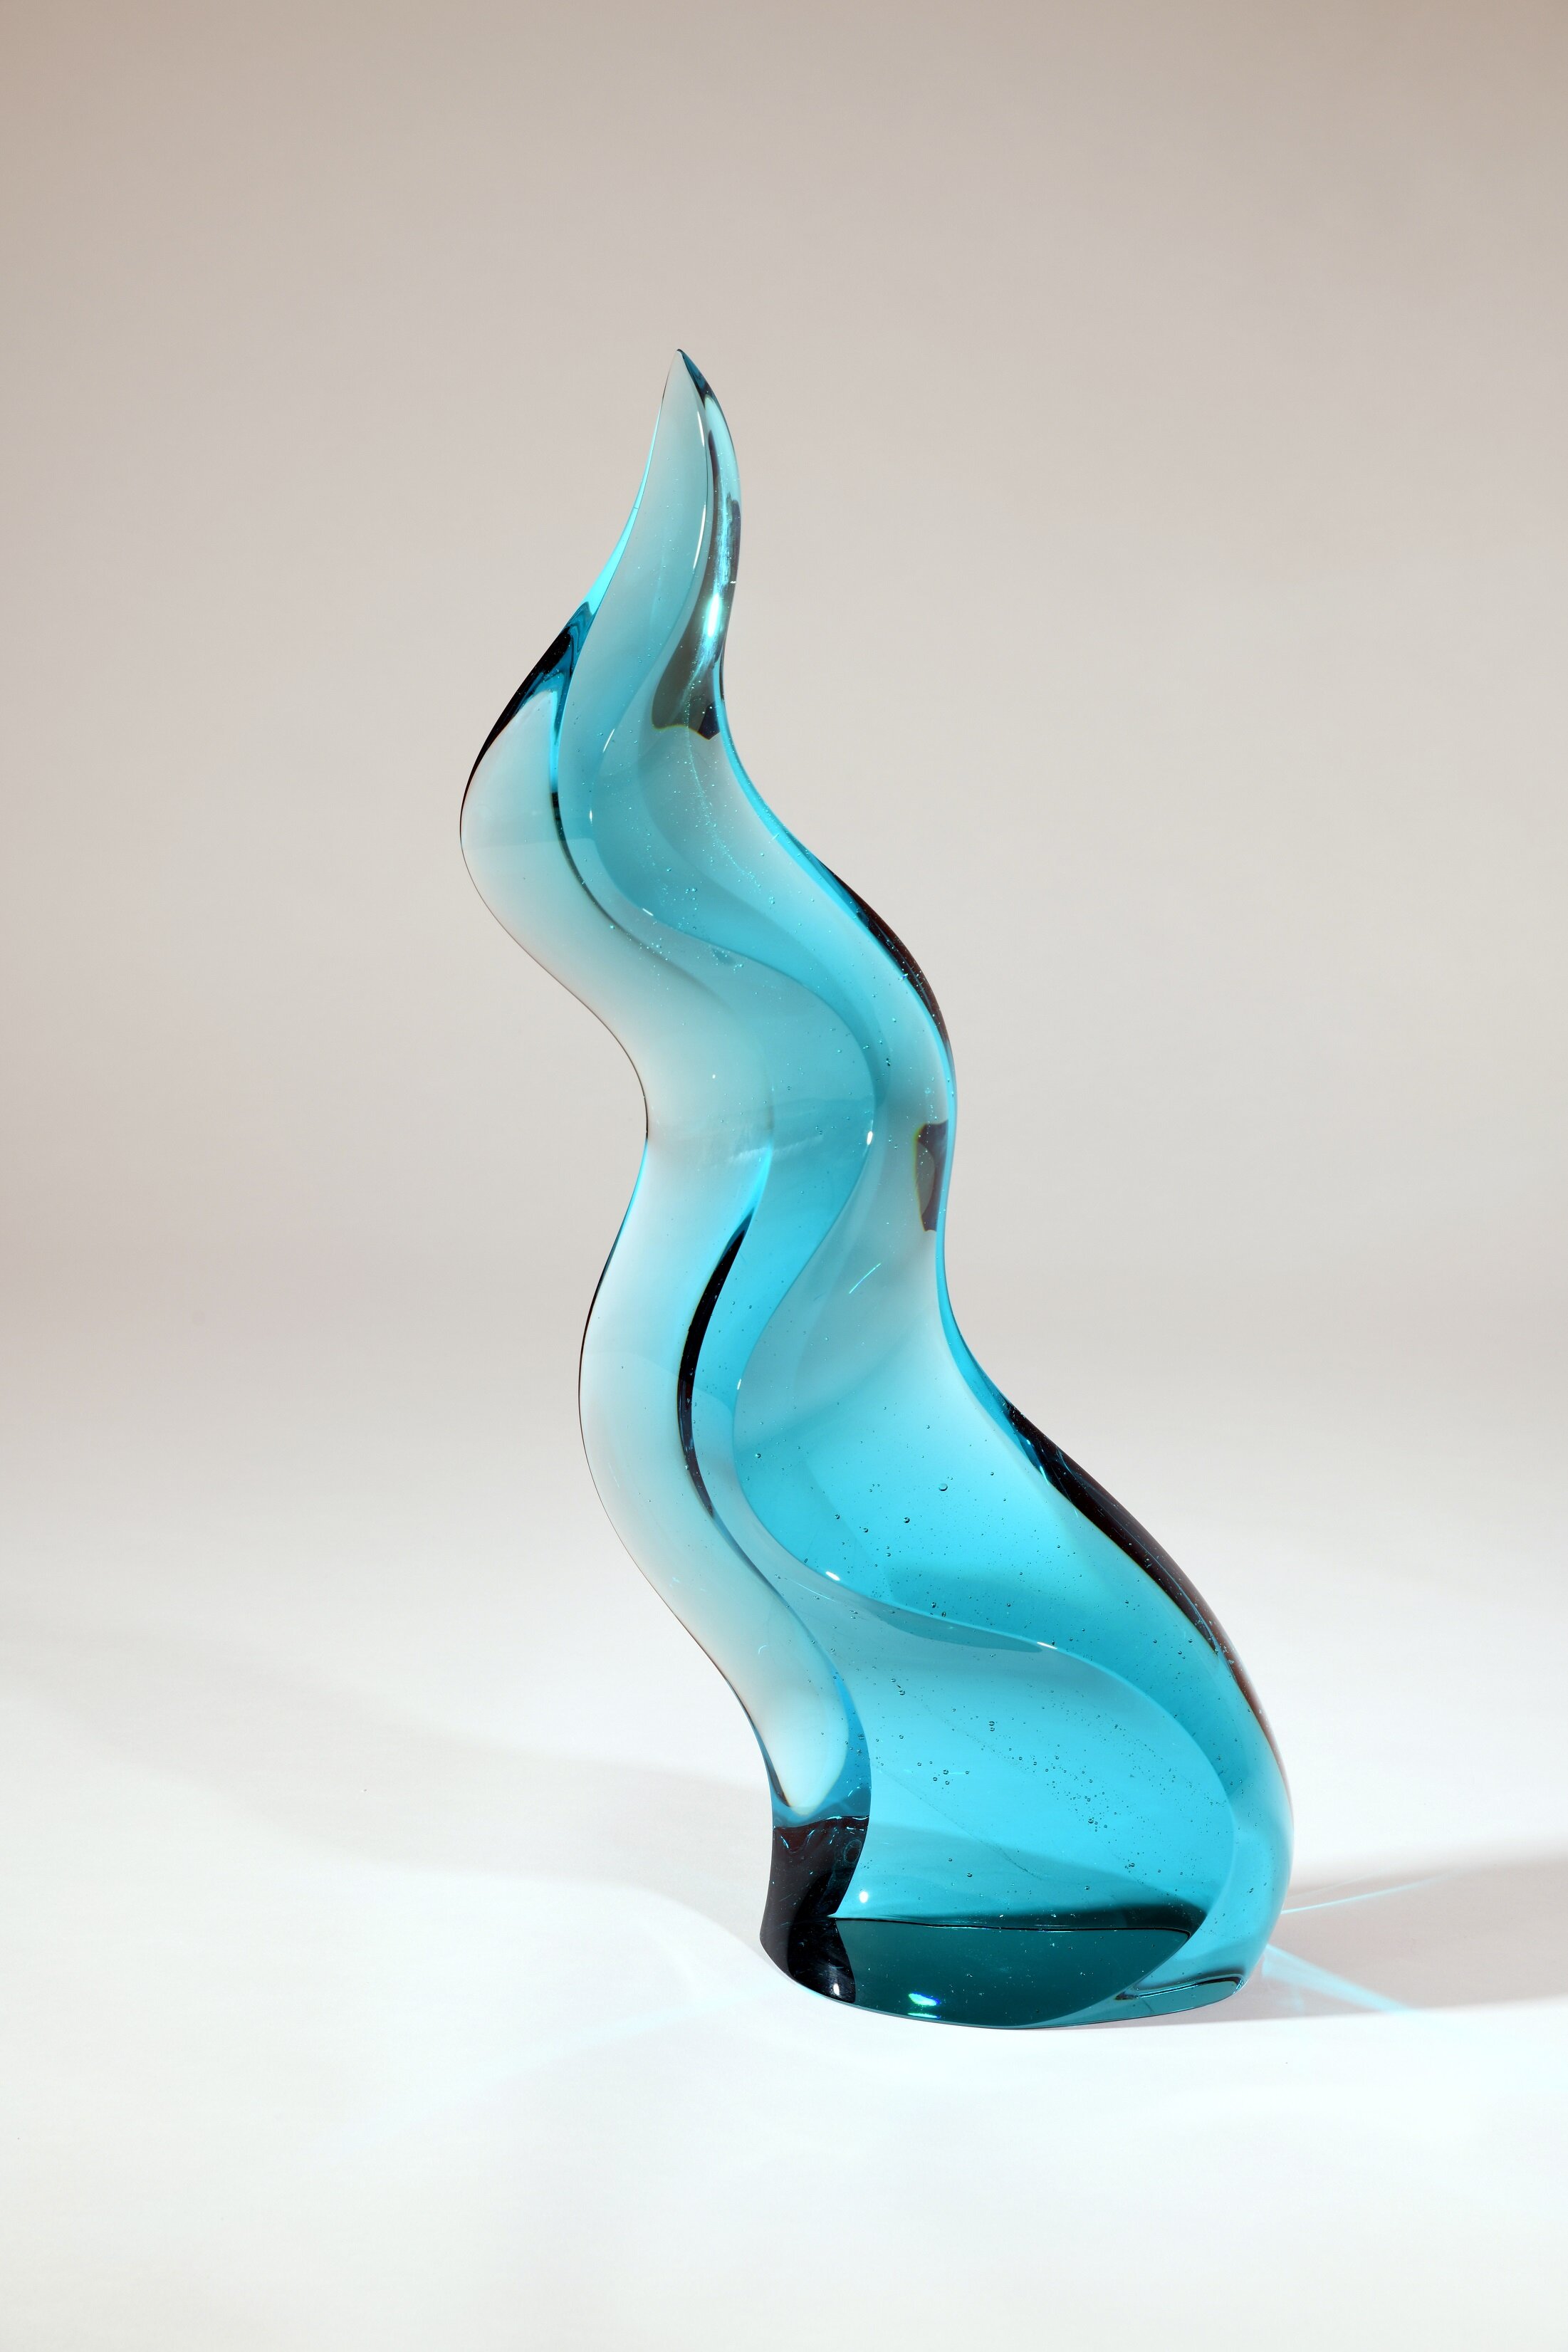 Aanbod Absoluut Praten STUDIO FOCUS | PETER BREMERS — Schantz Galleries Contemporary Glass